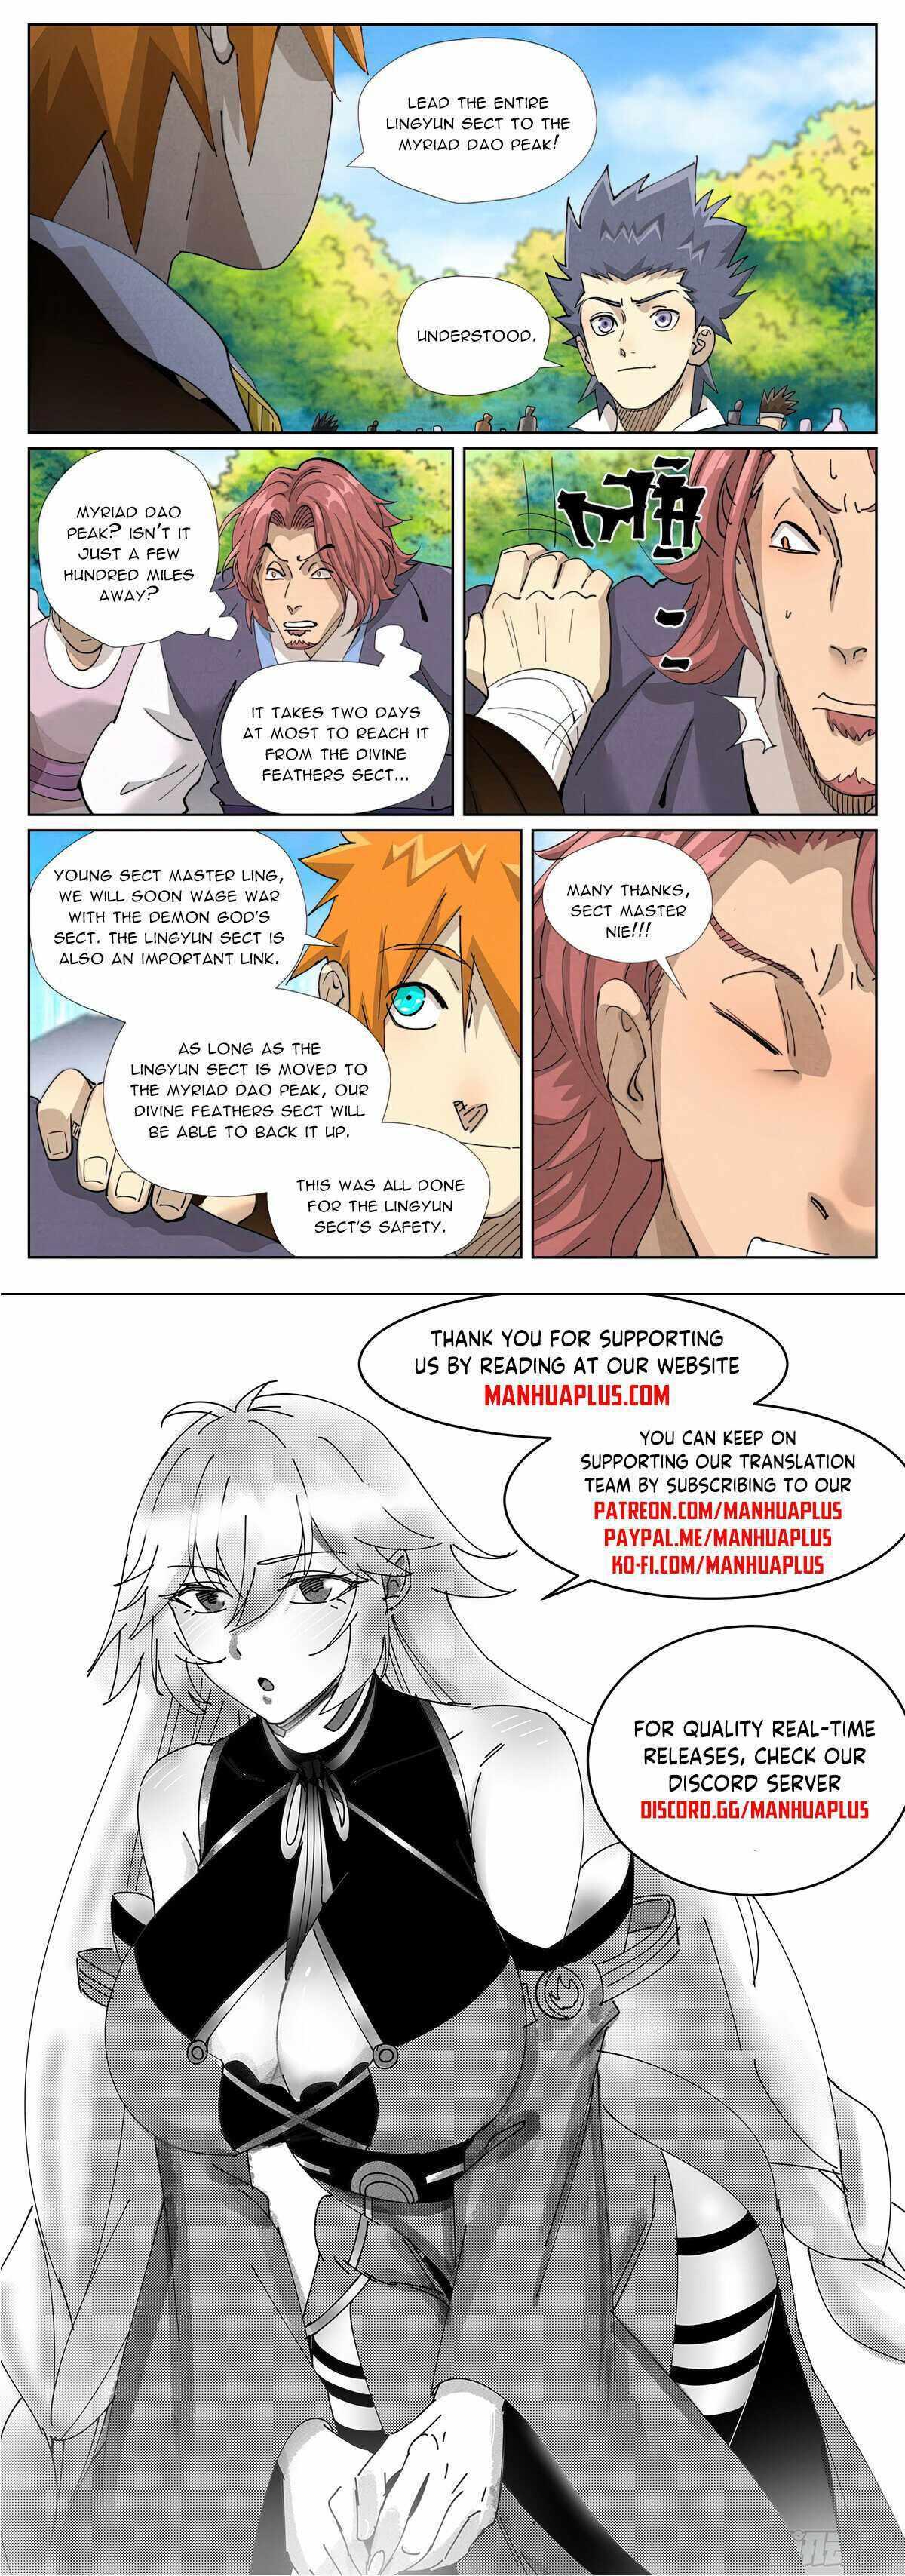 Tales Of Demons And Gods Chapter 431-1 page 10 - Mangakakalot